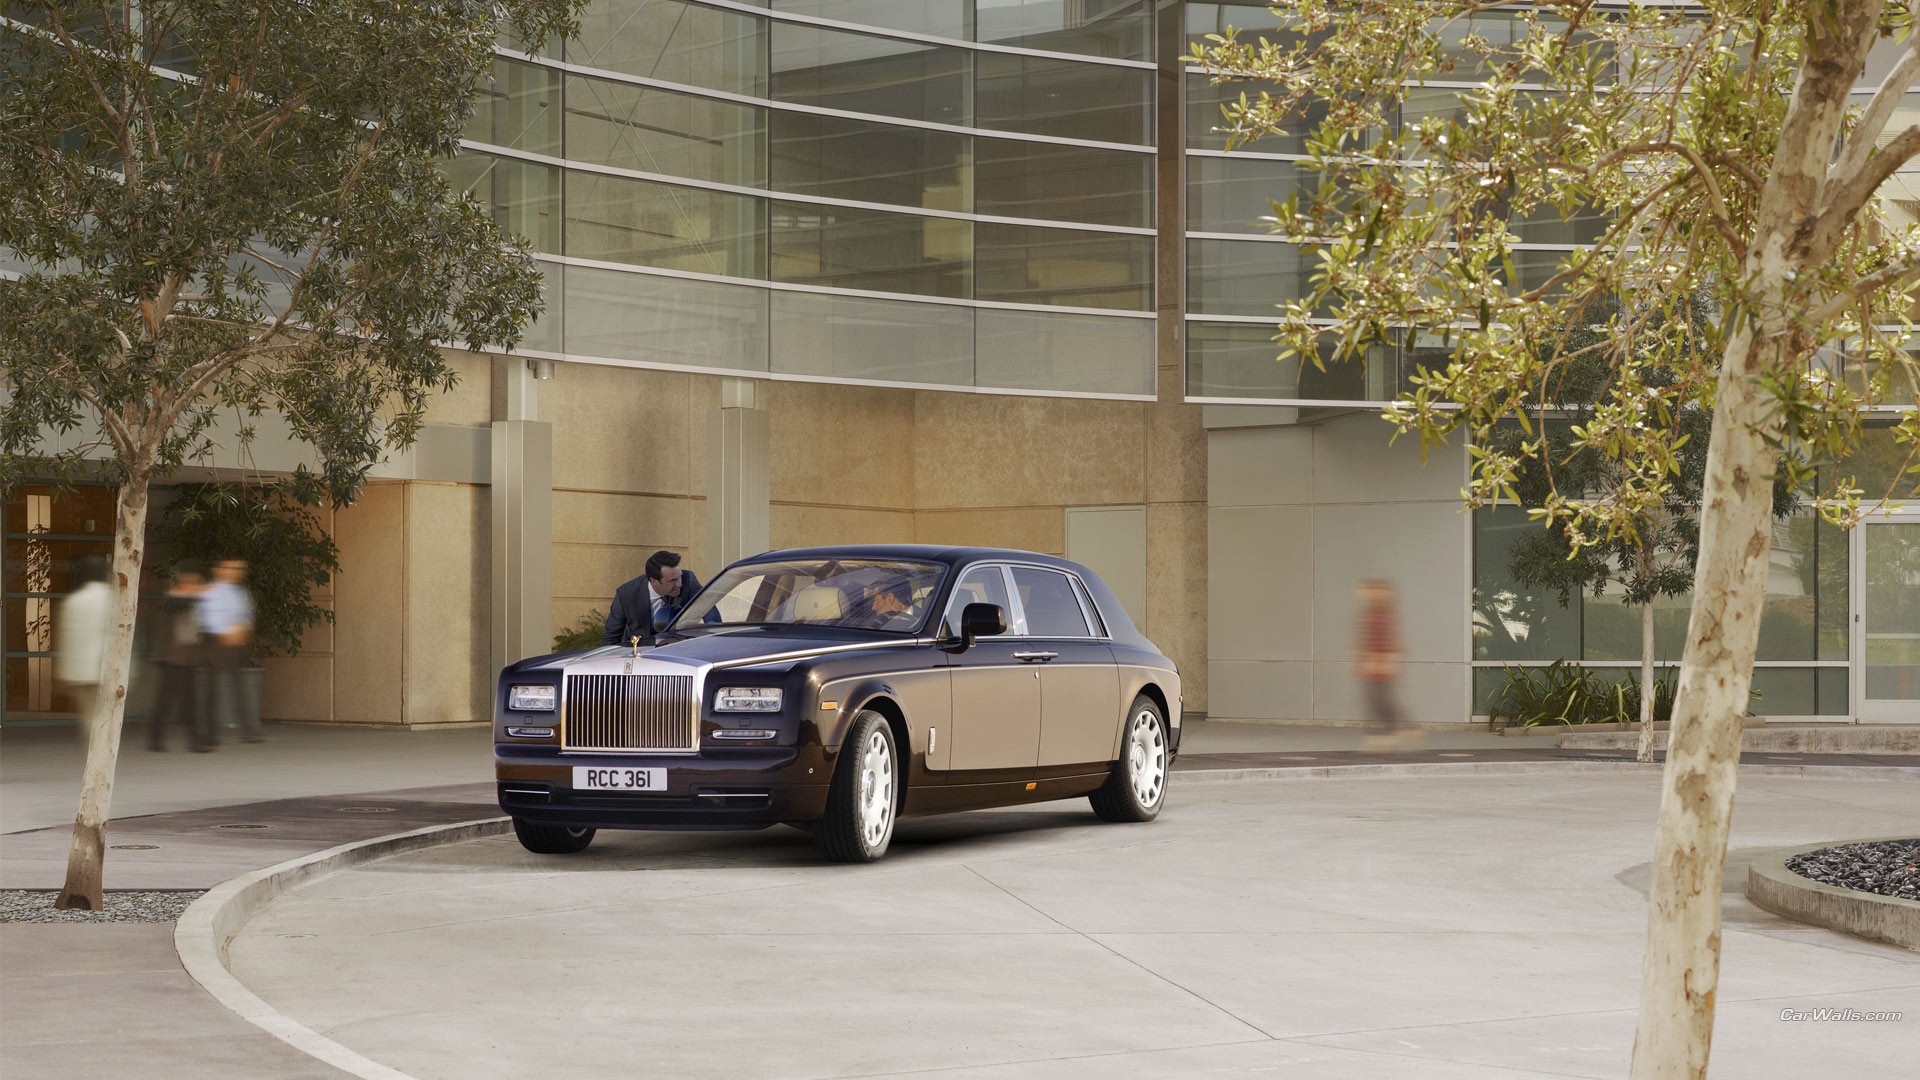 General 1920x1080 car Rolls-Royce Phantom vehicle luxury cars Rolls-Royce numbers British cars